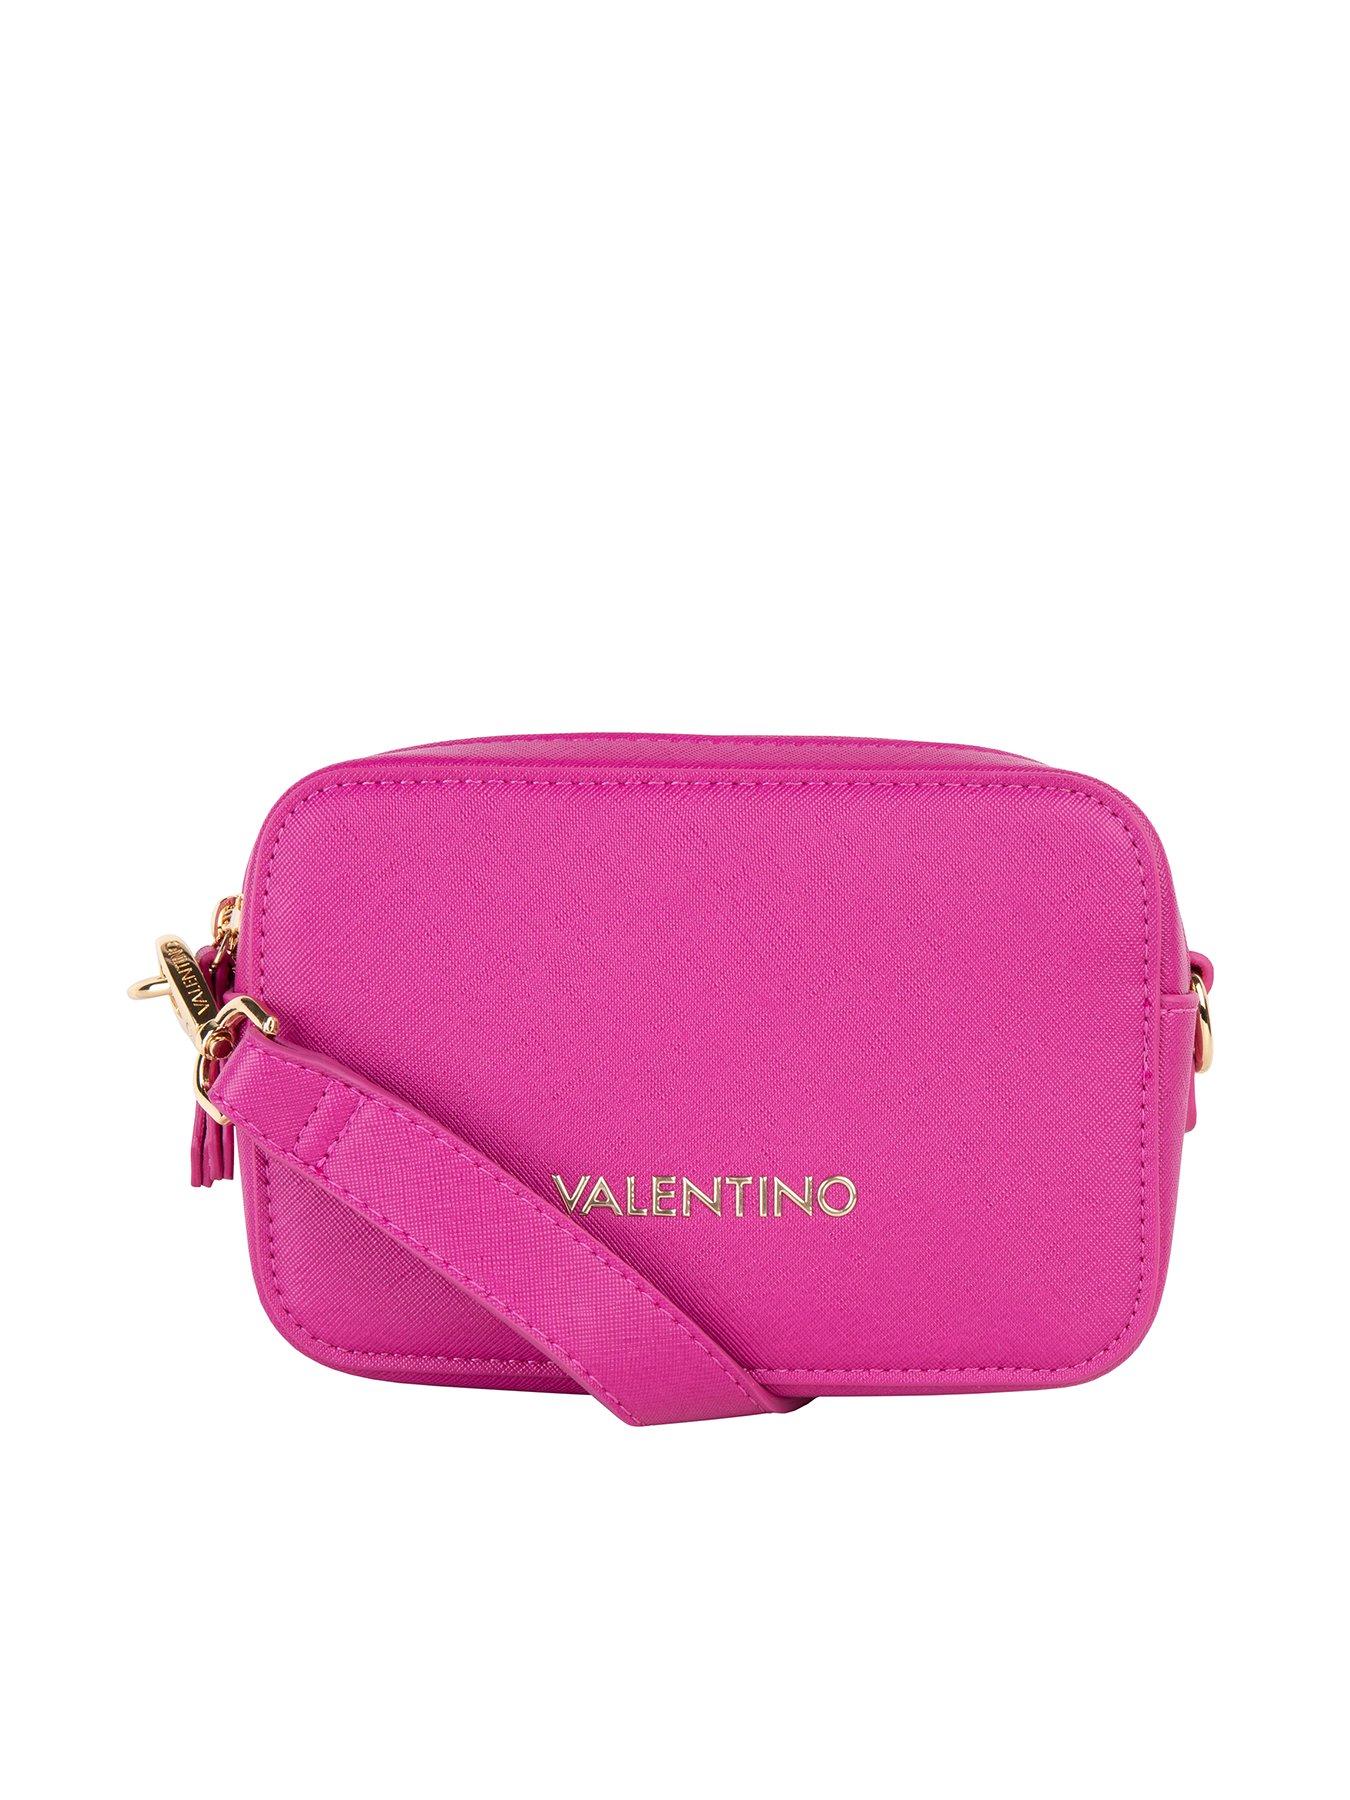 Mario valentino crossbody Authentic pink gold  Valentino crossbody, Mario  valentino bags, Mario valentino